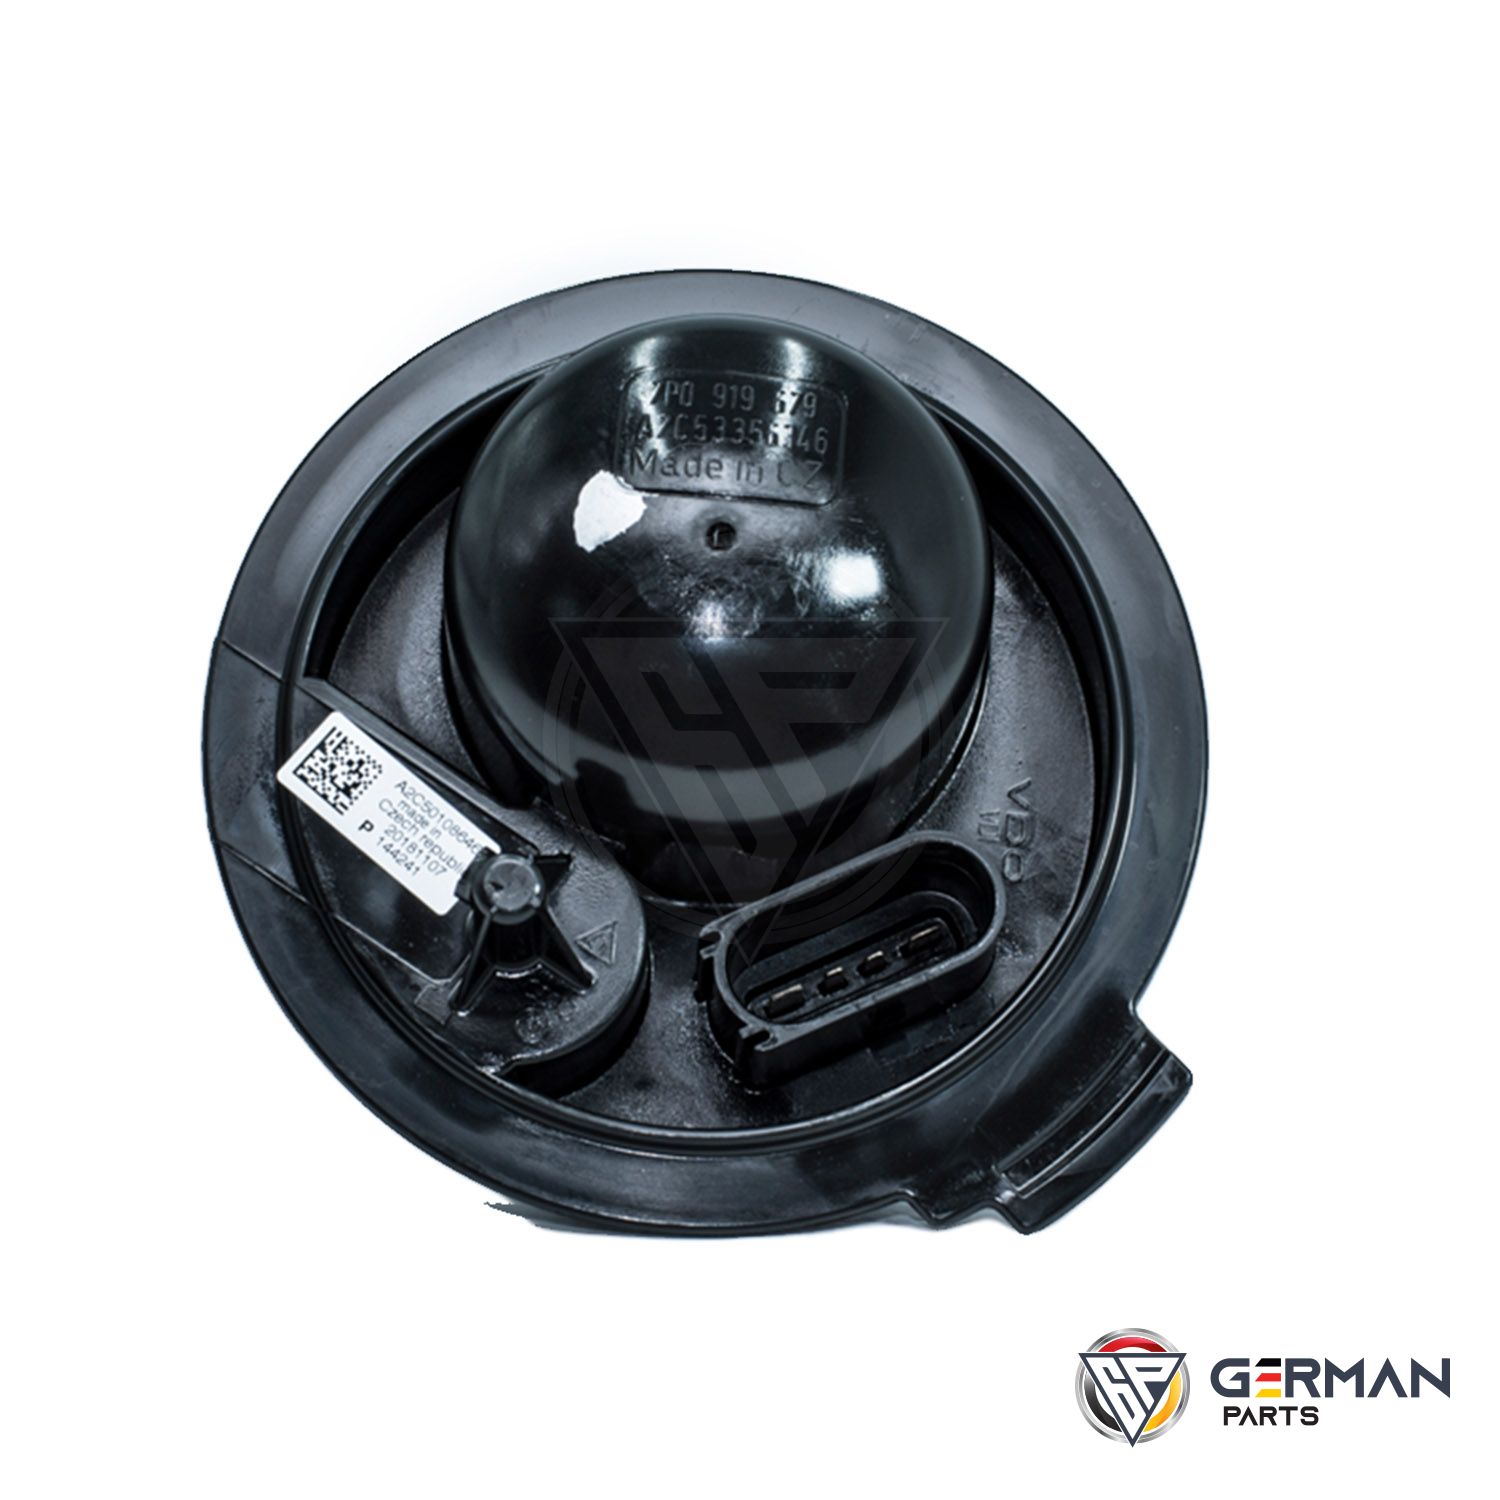 Buy Porsche Fuel Filter 95862042100 - German Parts